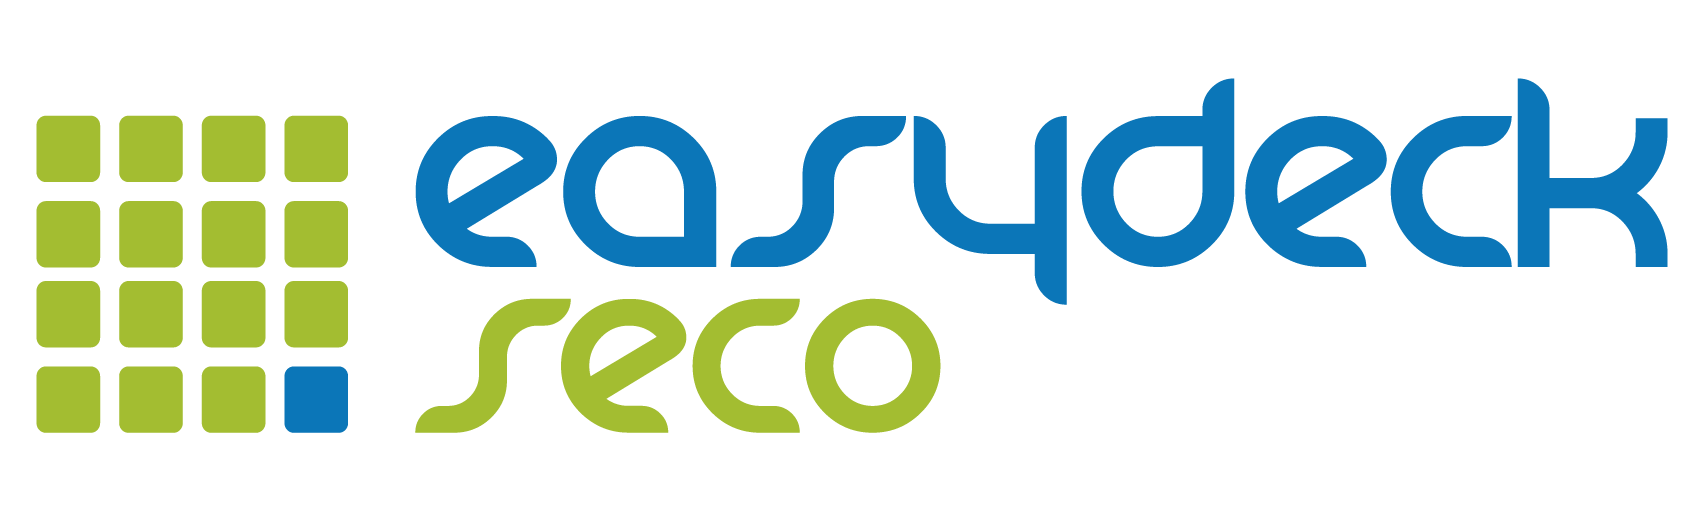 logotipo Easydeck seco